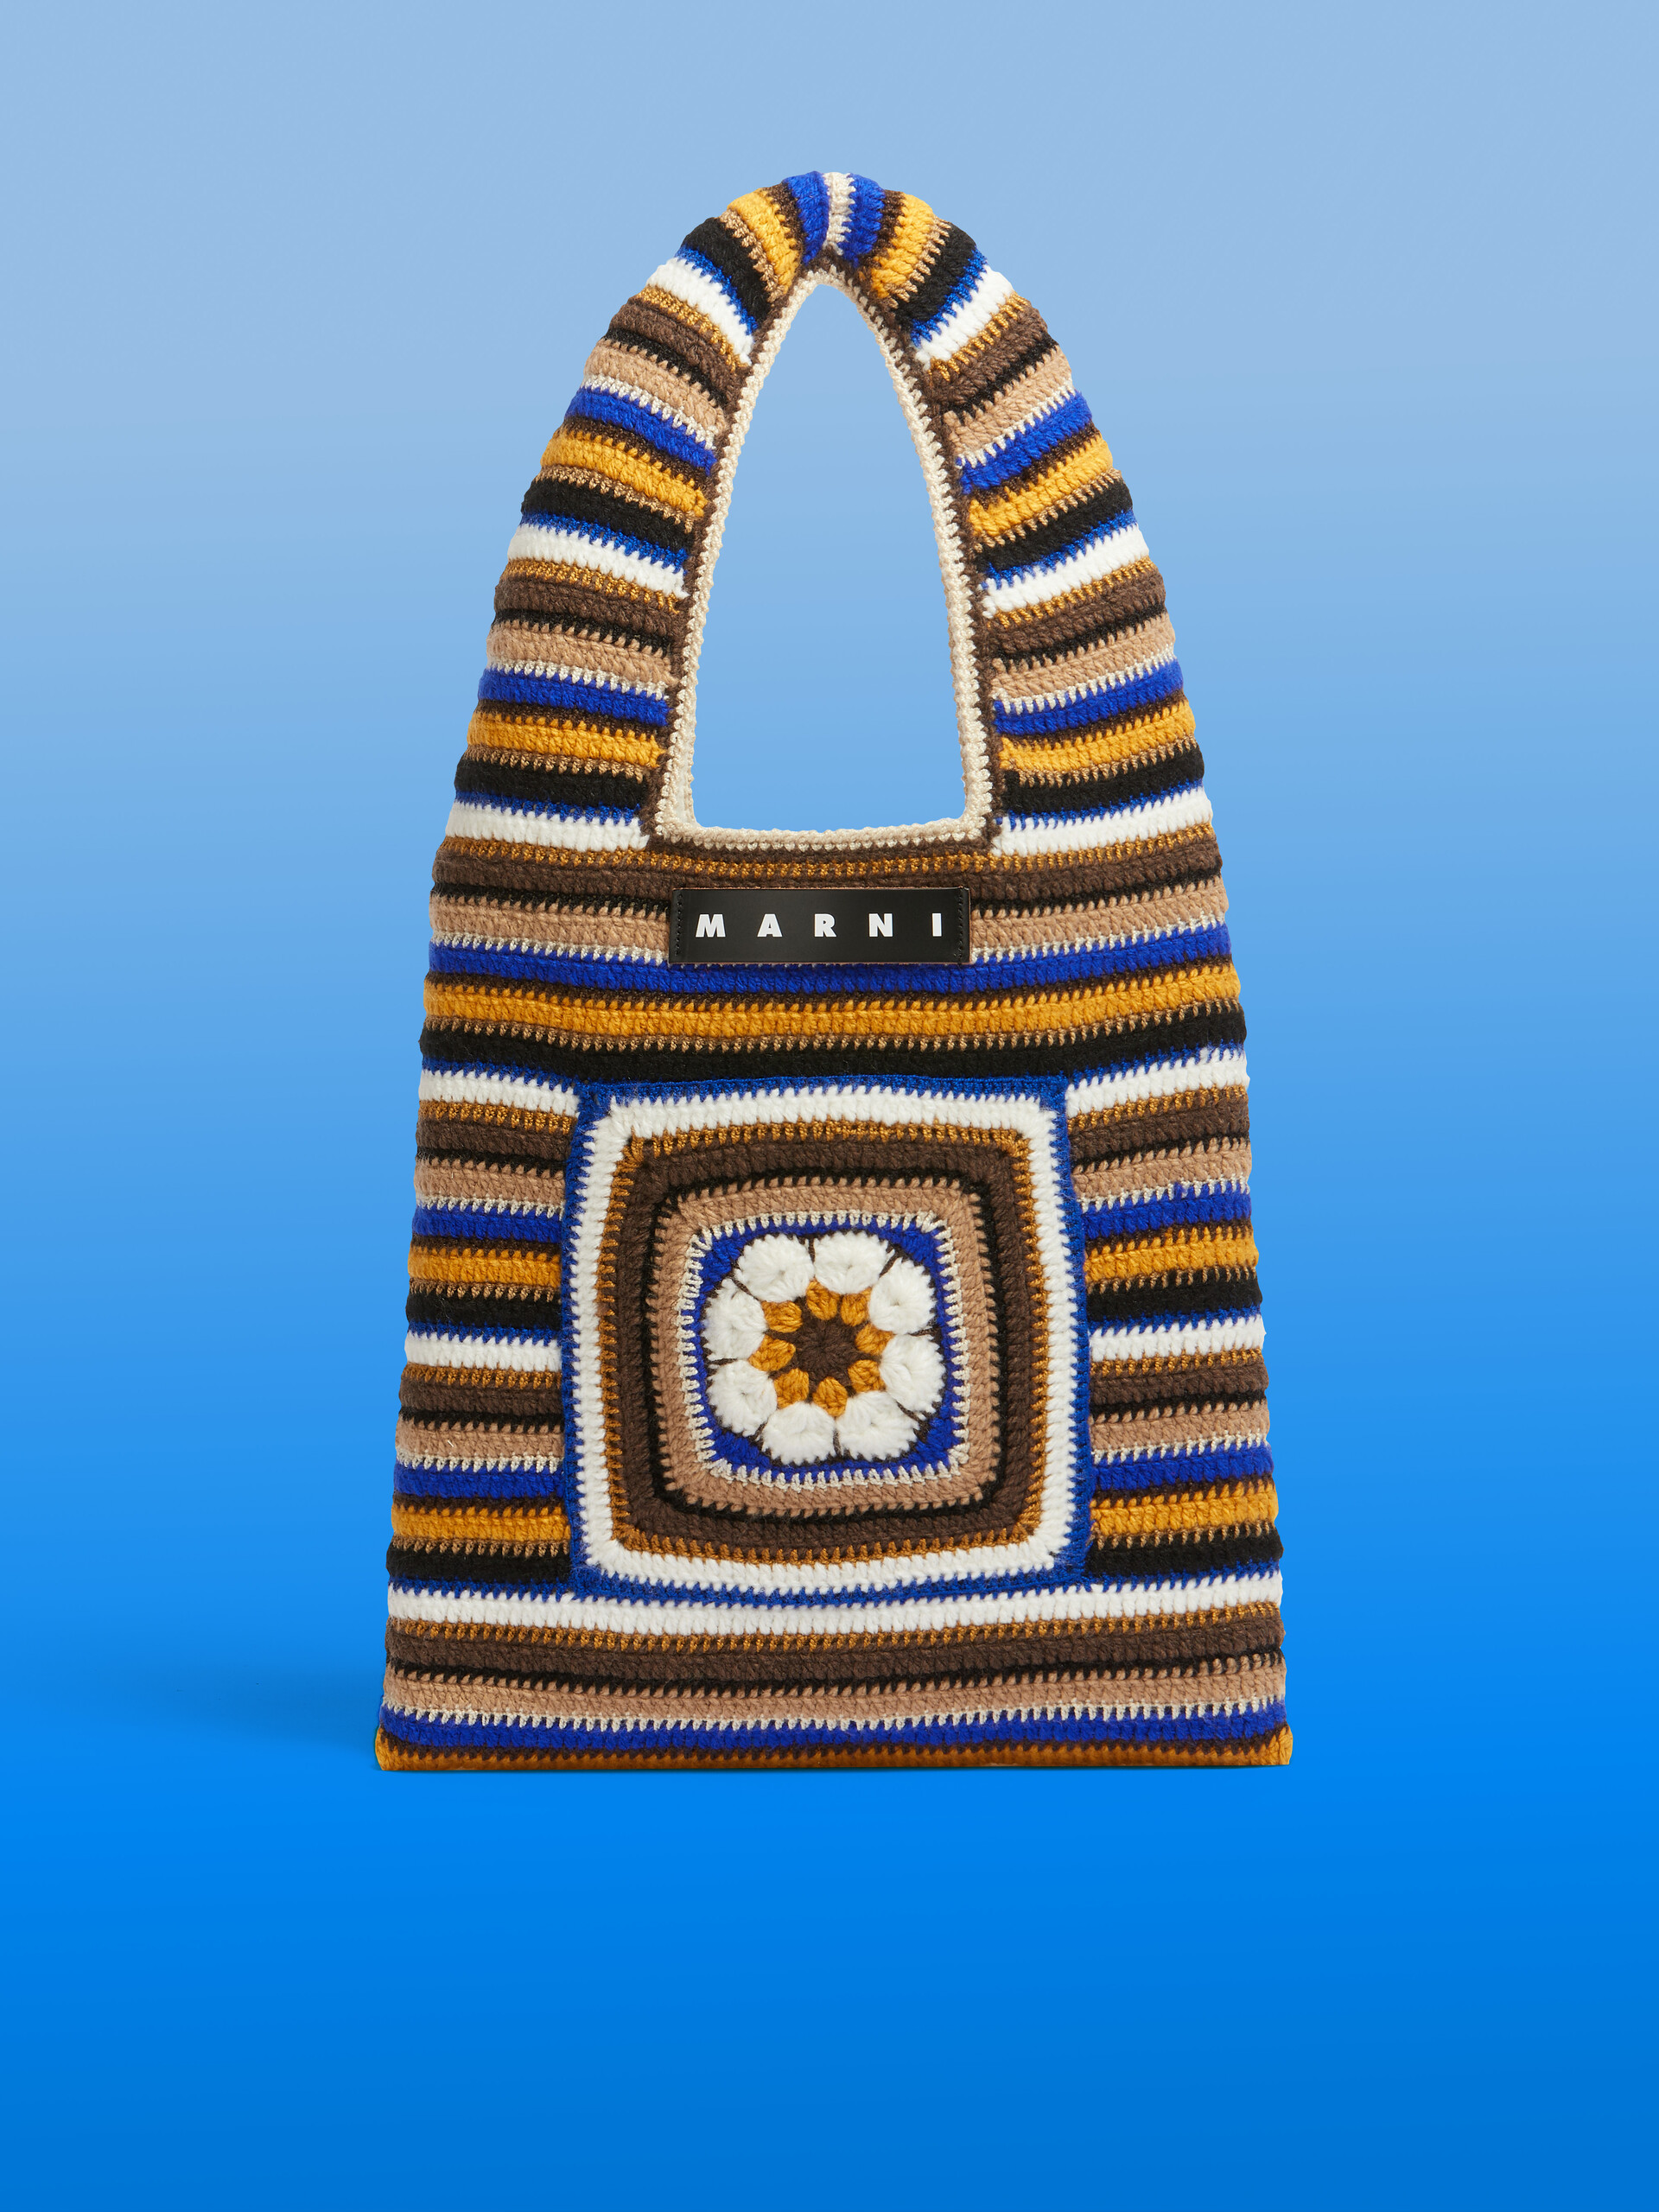 Marni crochet-knit long-sleeve hoodie - Blue